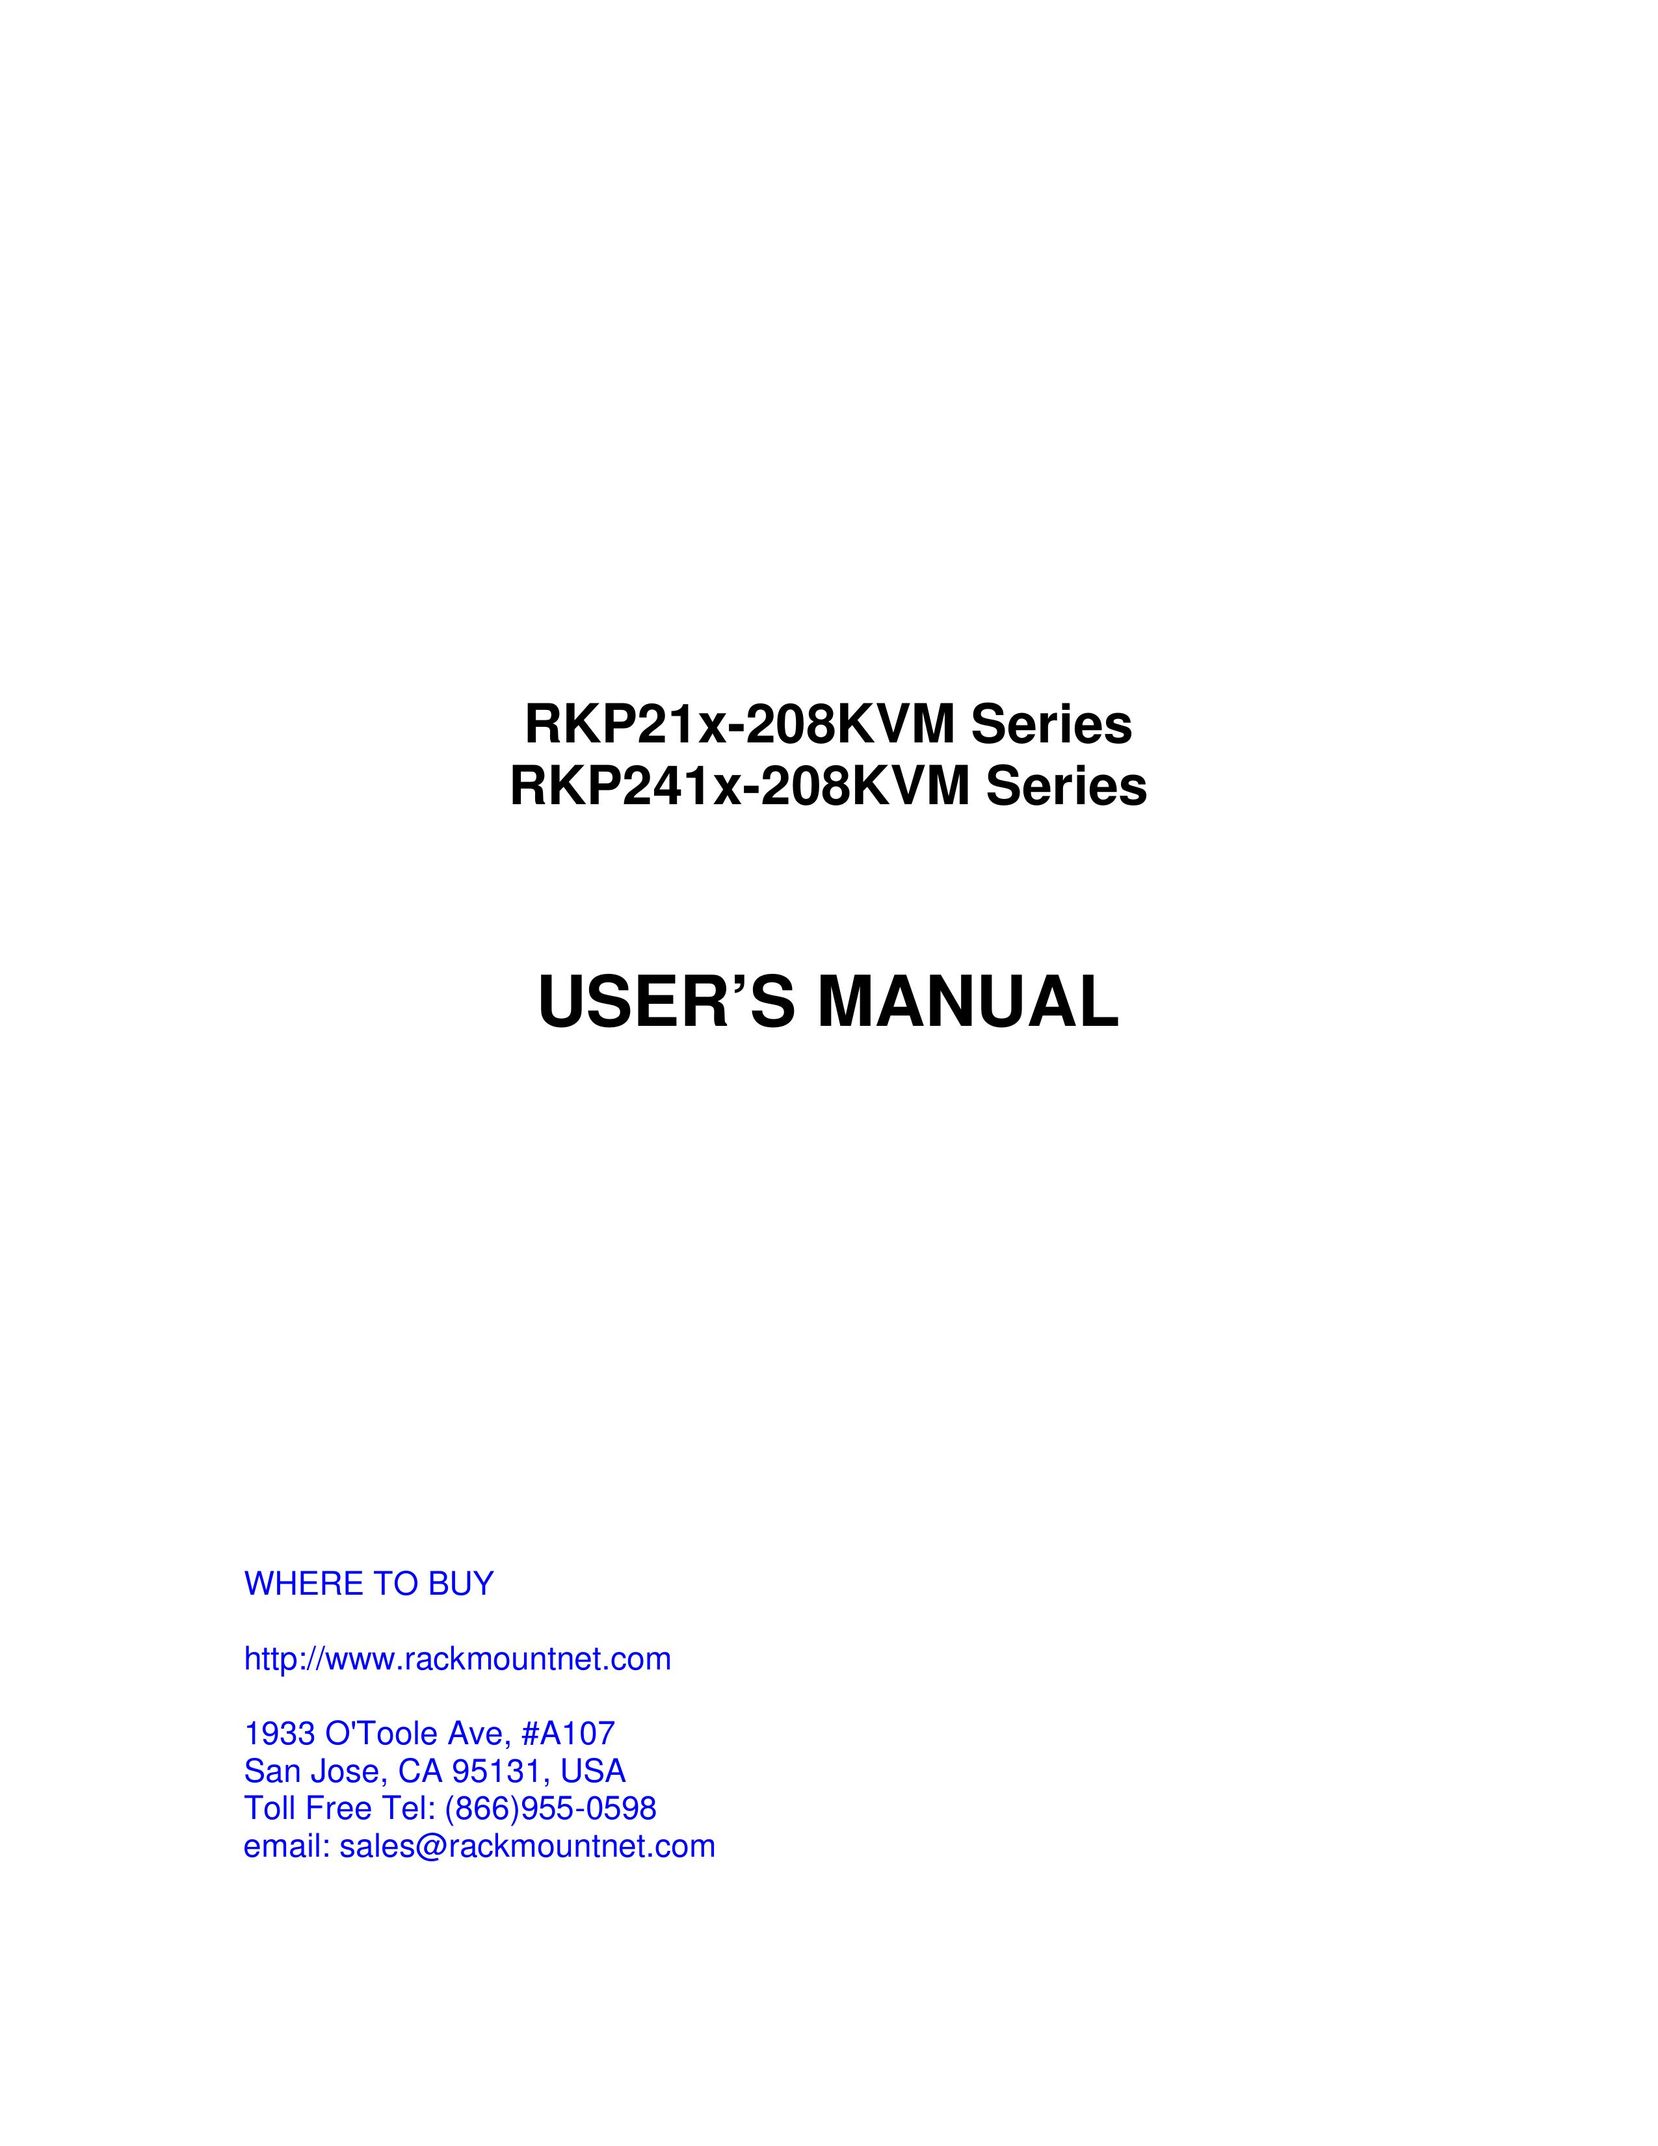 Rackmount Solutions RKP241x-208KVM Switch User Manual